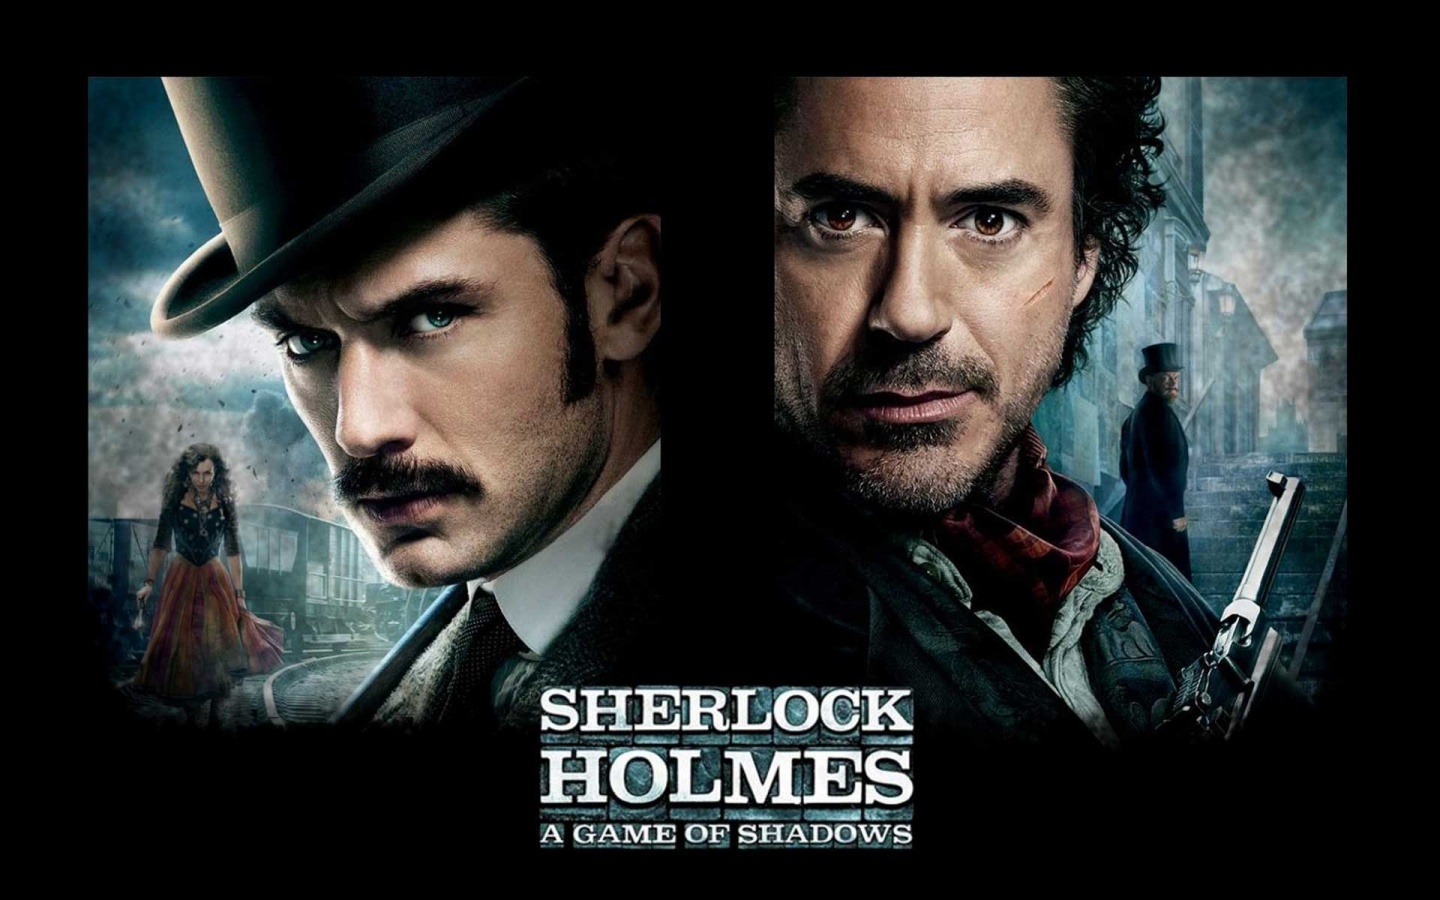 http://1.bp.blogspot.com/-5fahWNm7Uhk/Twj3cLxvYCI/AAAAAAAAAF4/0quPt16iB8A/s1600/Sherlock-Holmes-A-Game-of-Shadows-Movie-Poster.jpg